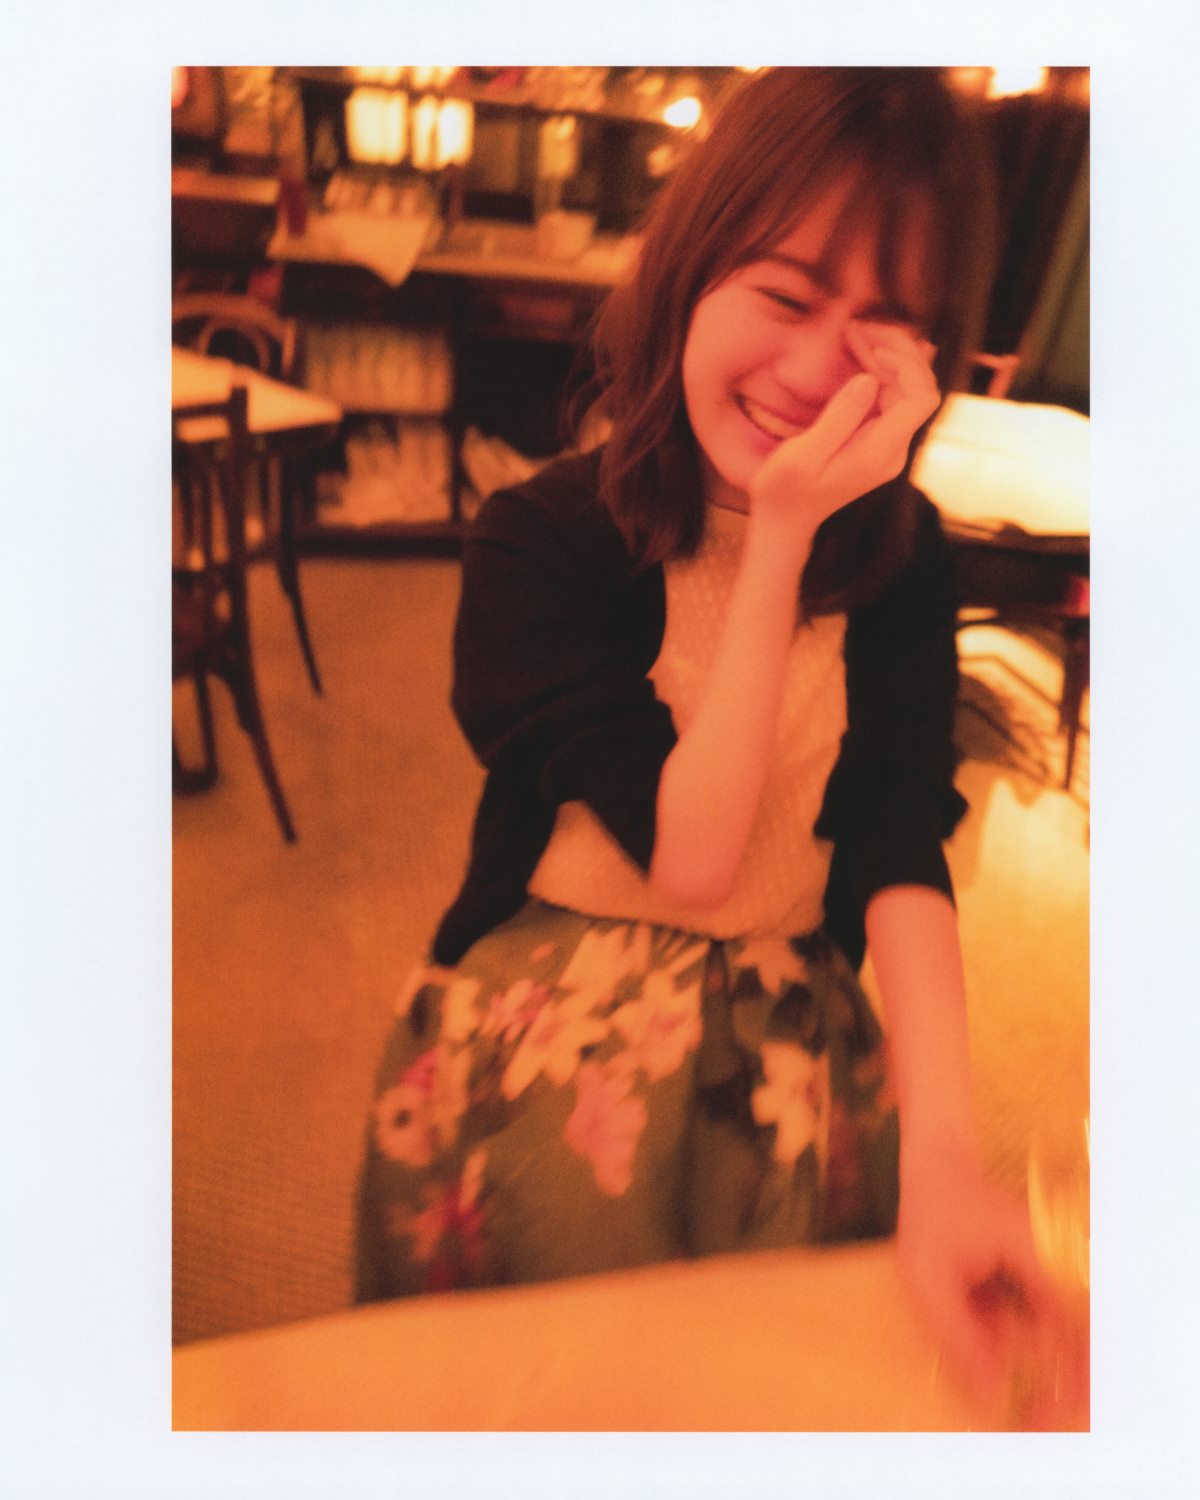 Photobook Ikuta Erika 2nd Photobook Intermission Nogizaka46 Bonus Postcard 生田絵梨花写真集 インターミッション 0130 8707565673.jpg